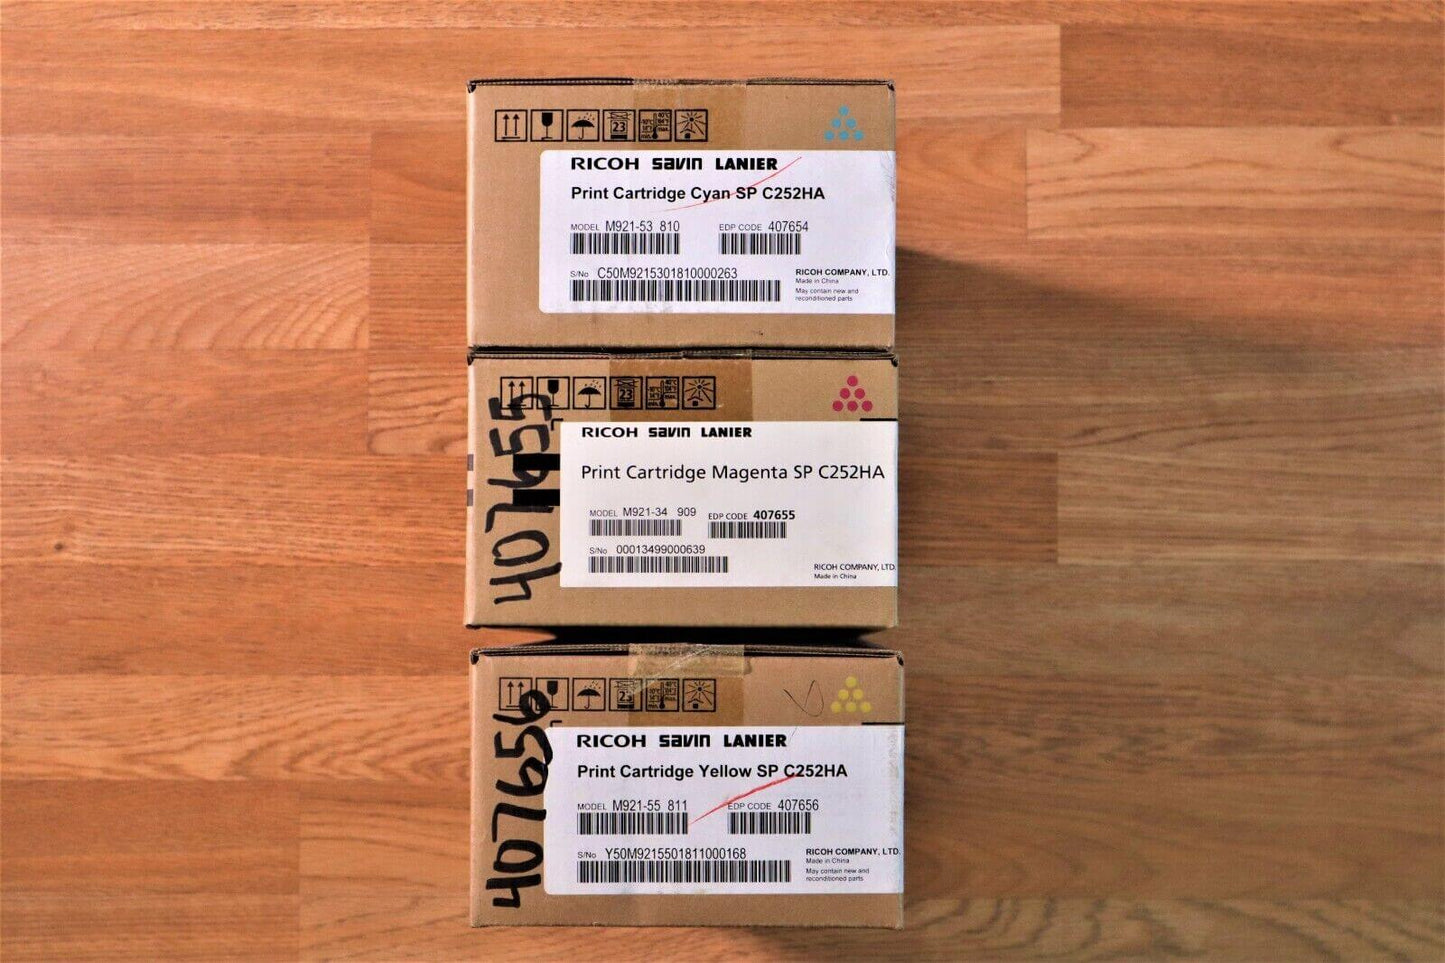 Genuine Ricoh SP C252HA CMY Print Cartridge EDP: 407654,55,56 - Same Day Ship!!! - copier-clearance-center